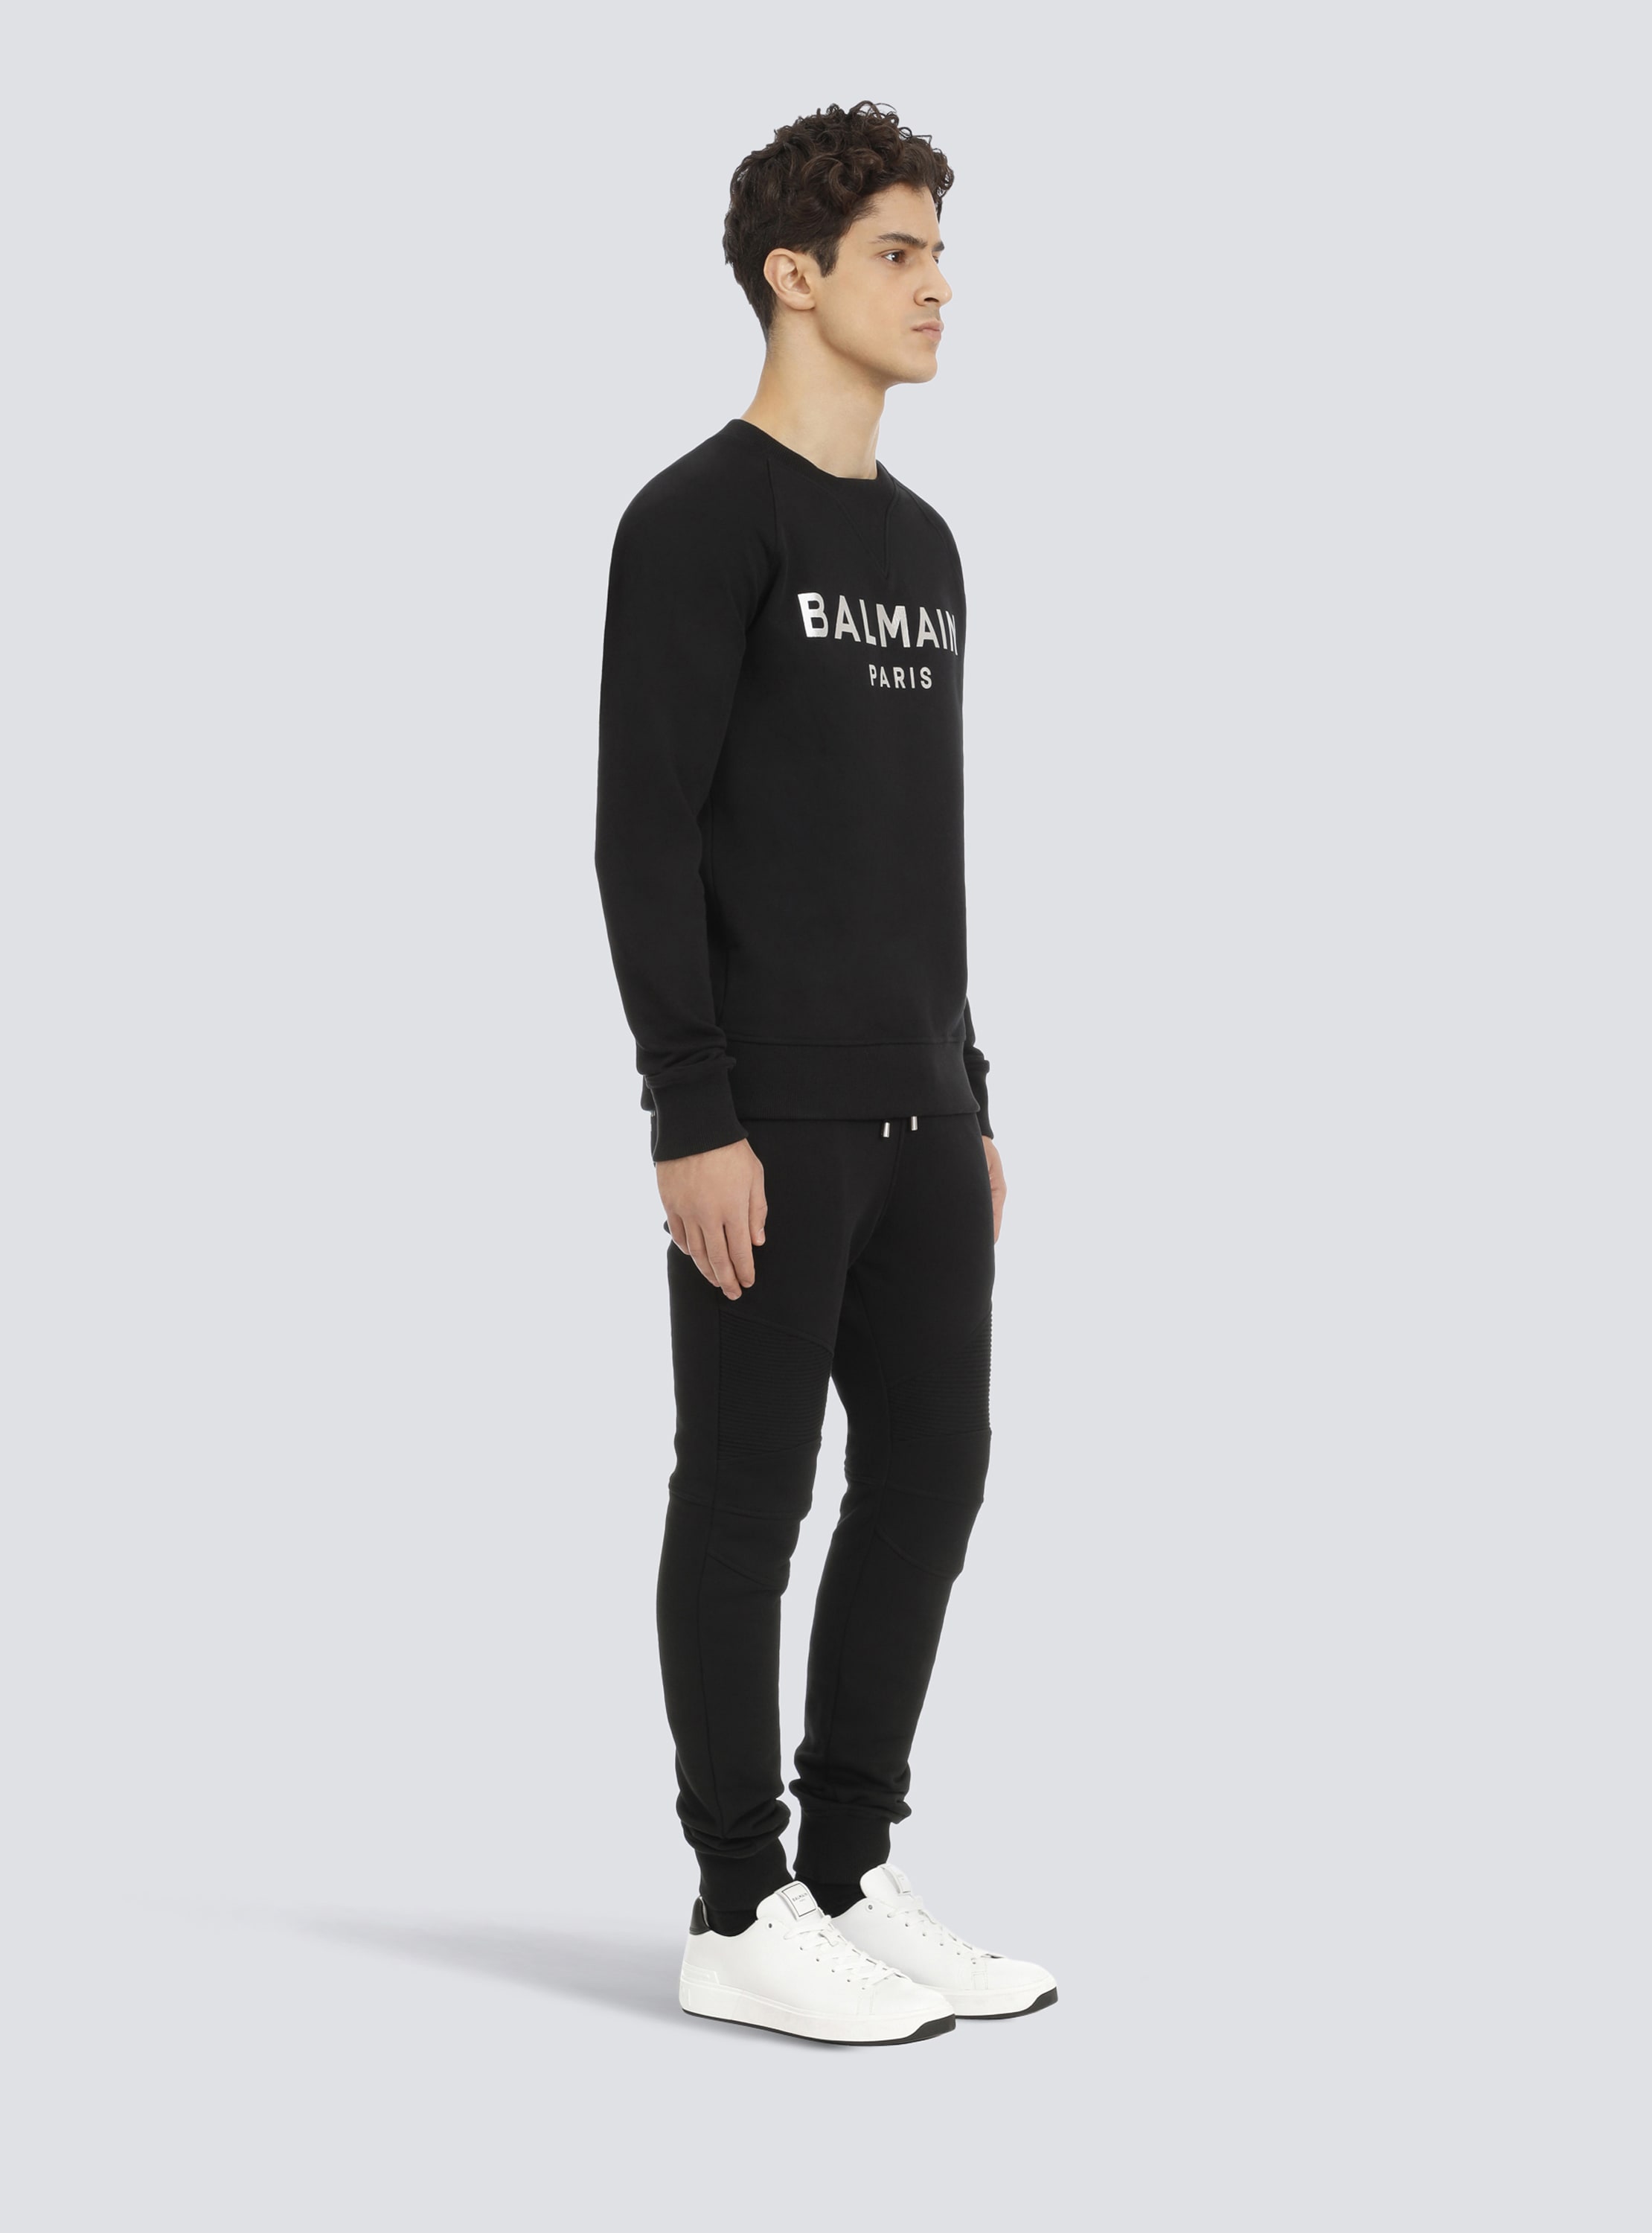 Sweatshirt in eco-responsible cotton with Balmain metallic logo print